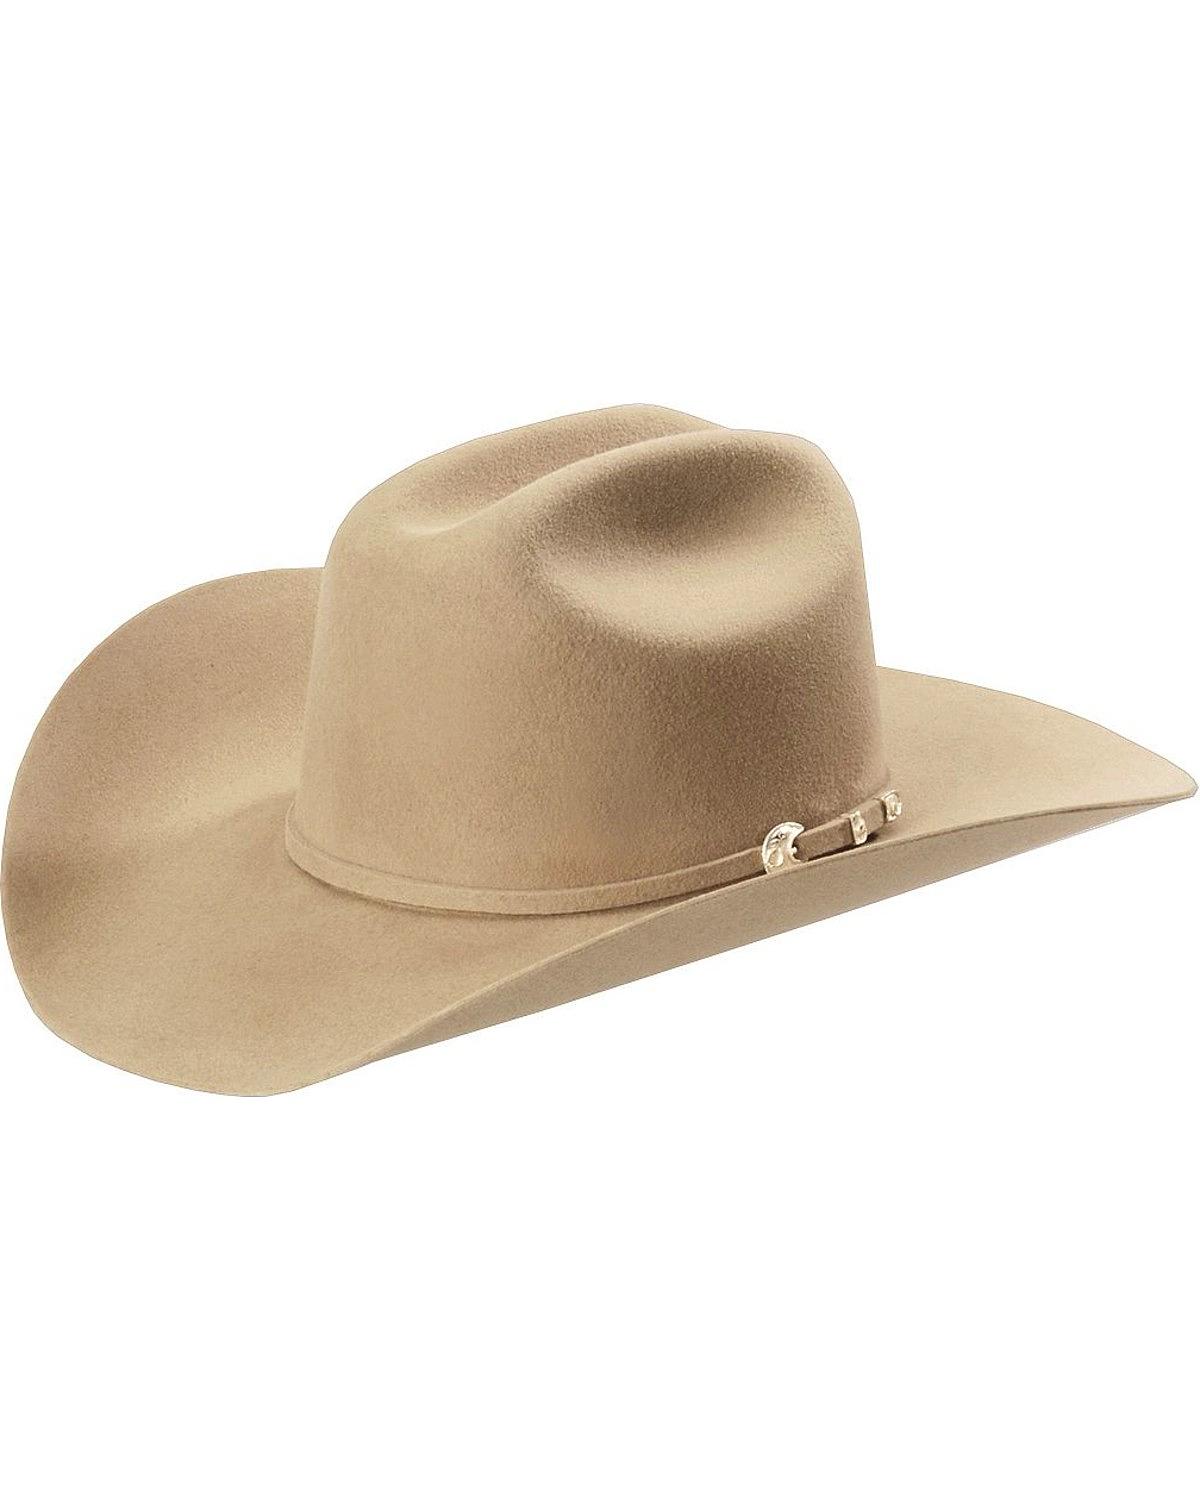 Stetson 4X Corral Silversand Buffalo Felt Cowboy Western Hat - Size 7 1/8 - image 1 of 3